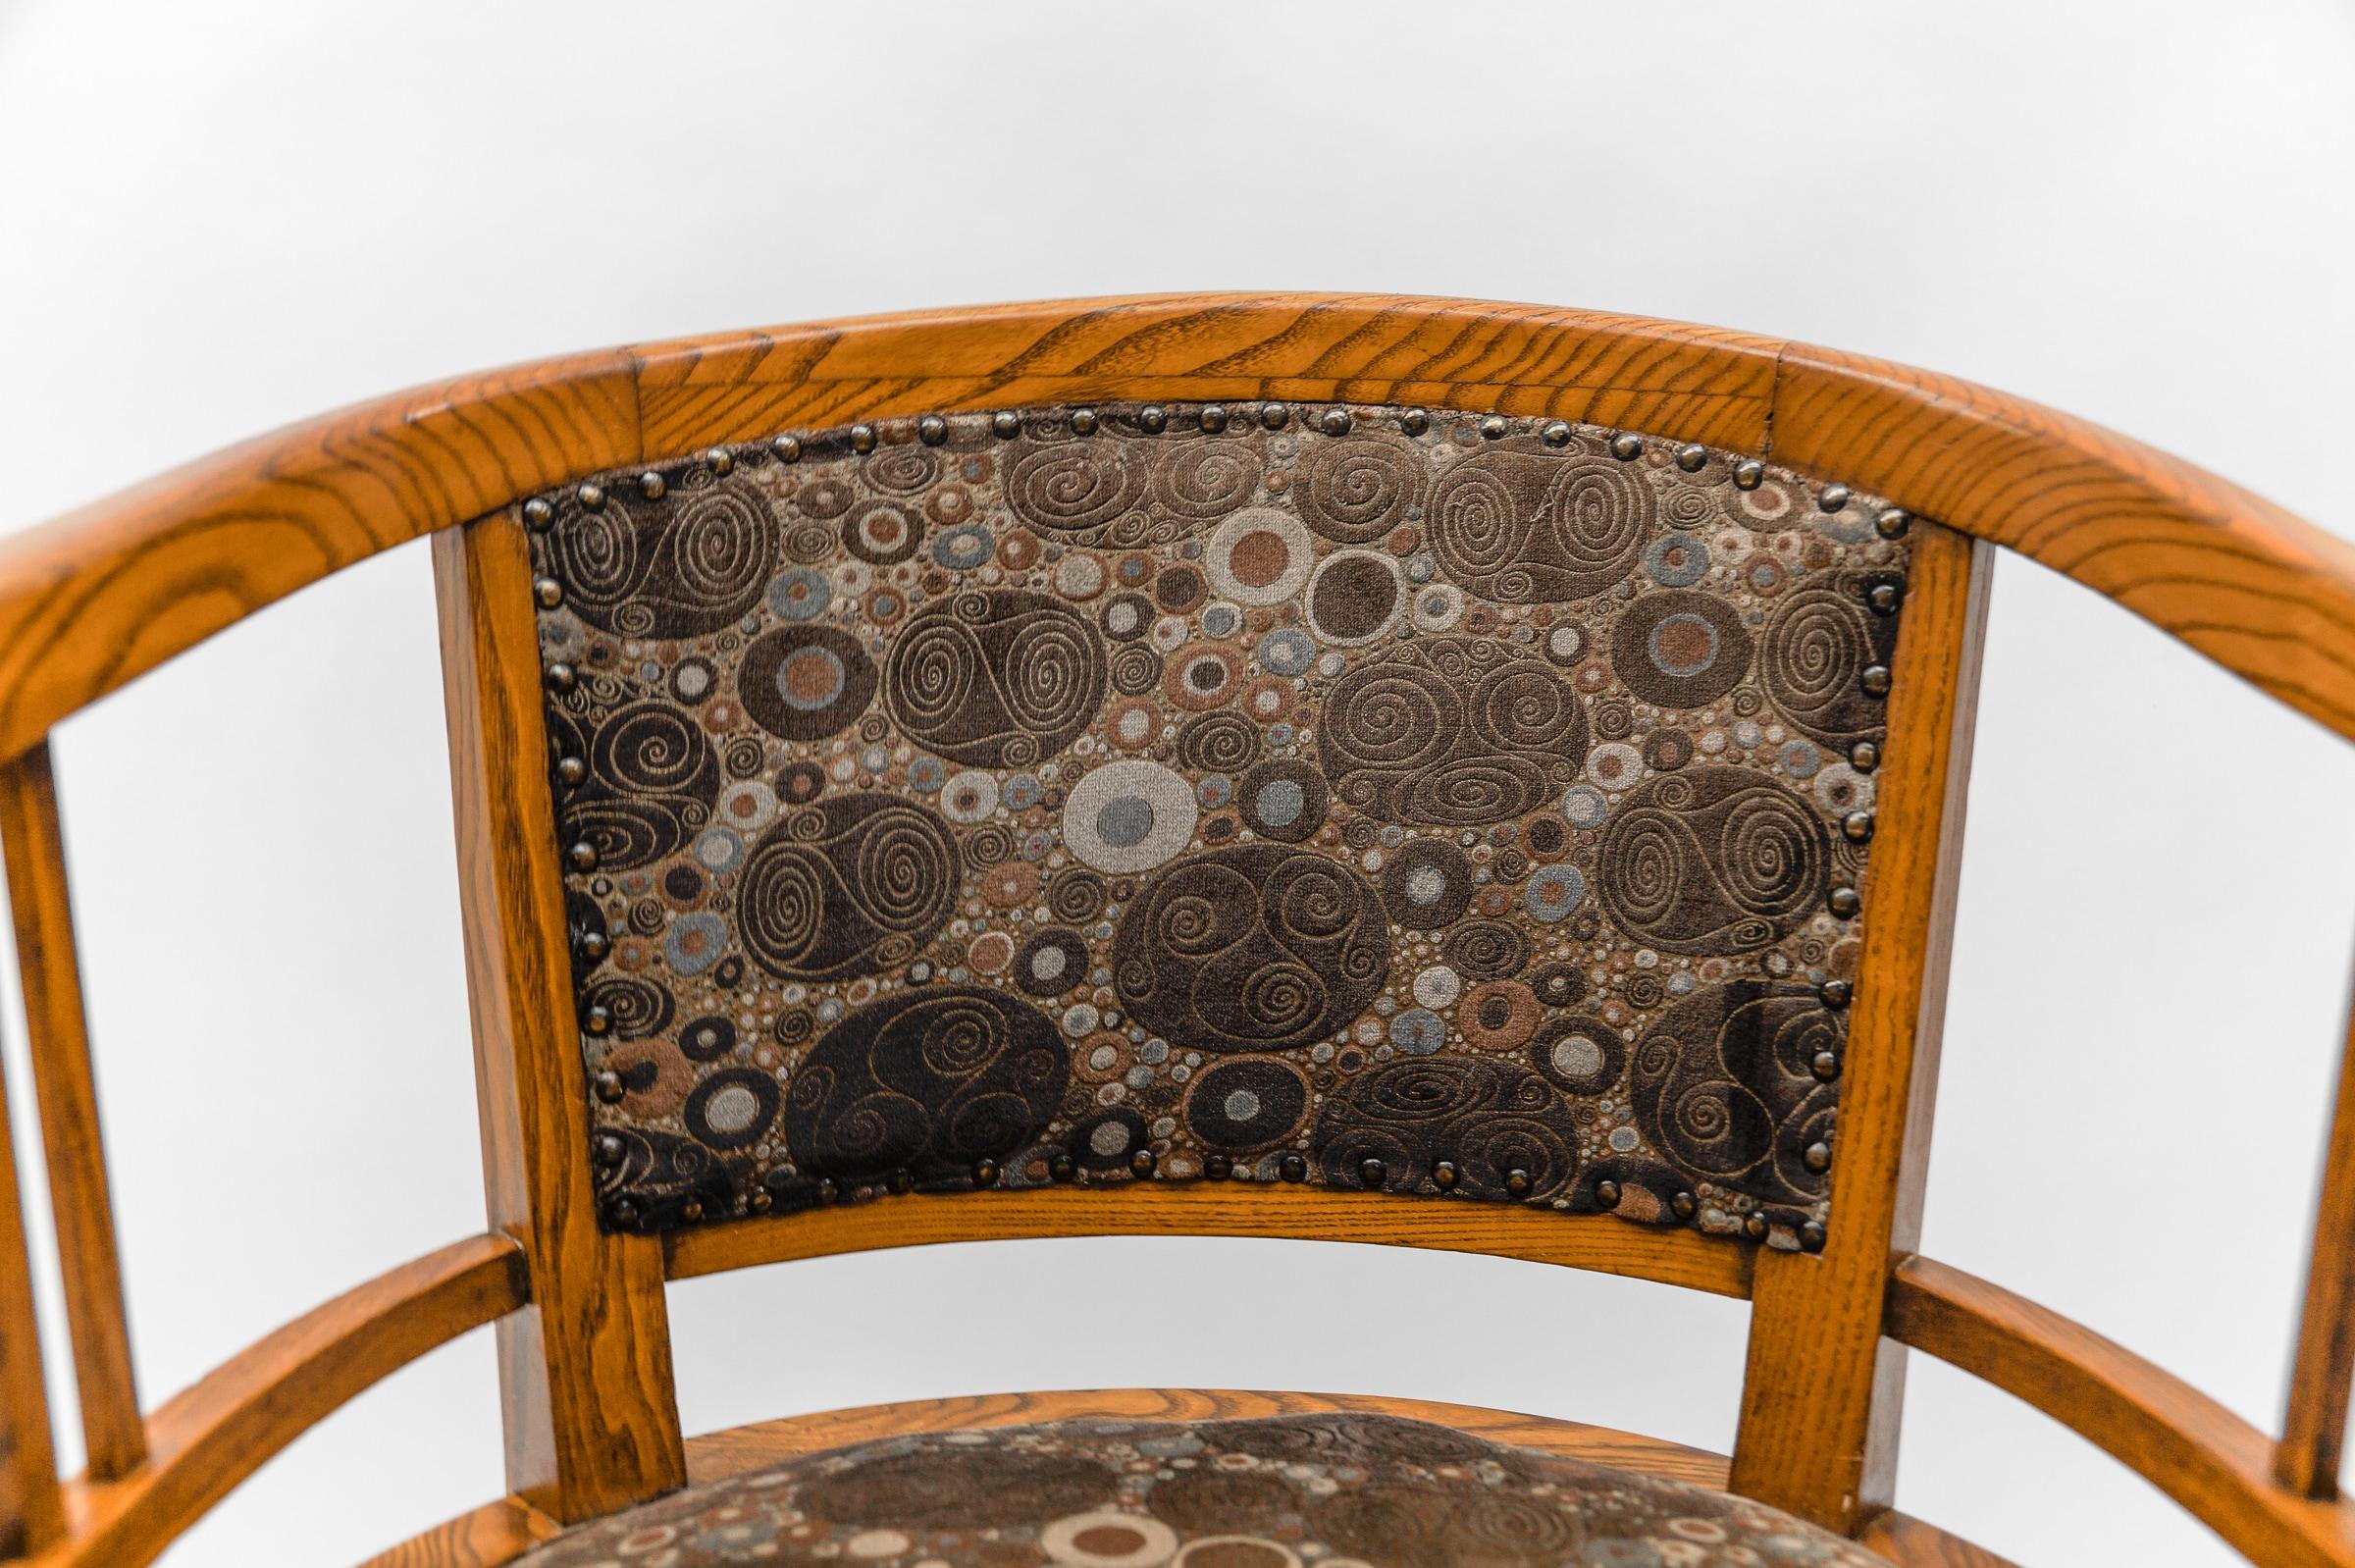 Art Deco Armchair with Gustav Klimt Upholstery Fabric, 1930s Austria For Sale 9